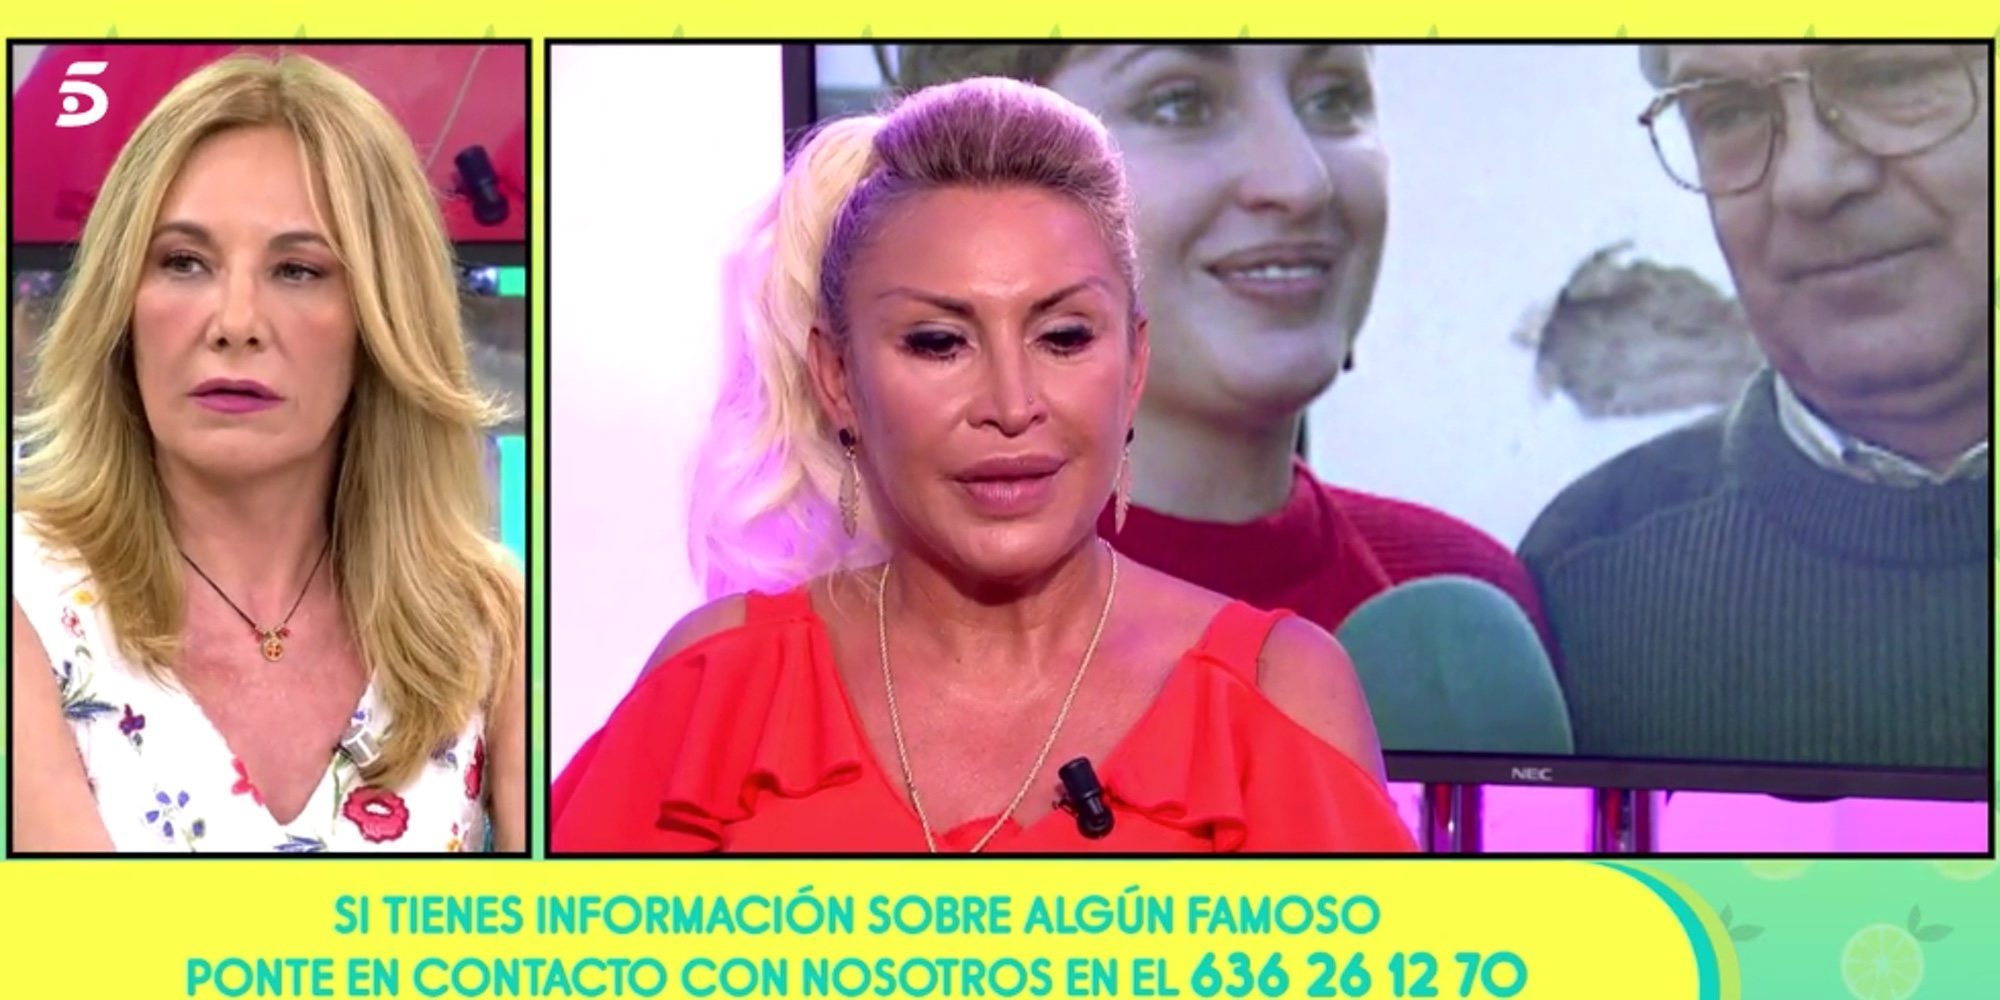 Belén Ro, contra Raquel Mosquera: "Utilizó a Rocío Carrasco para casarse con su padre"